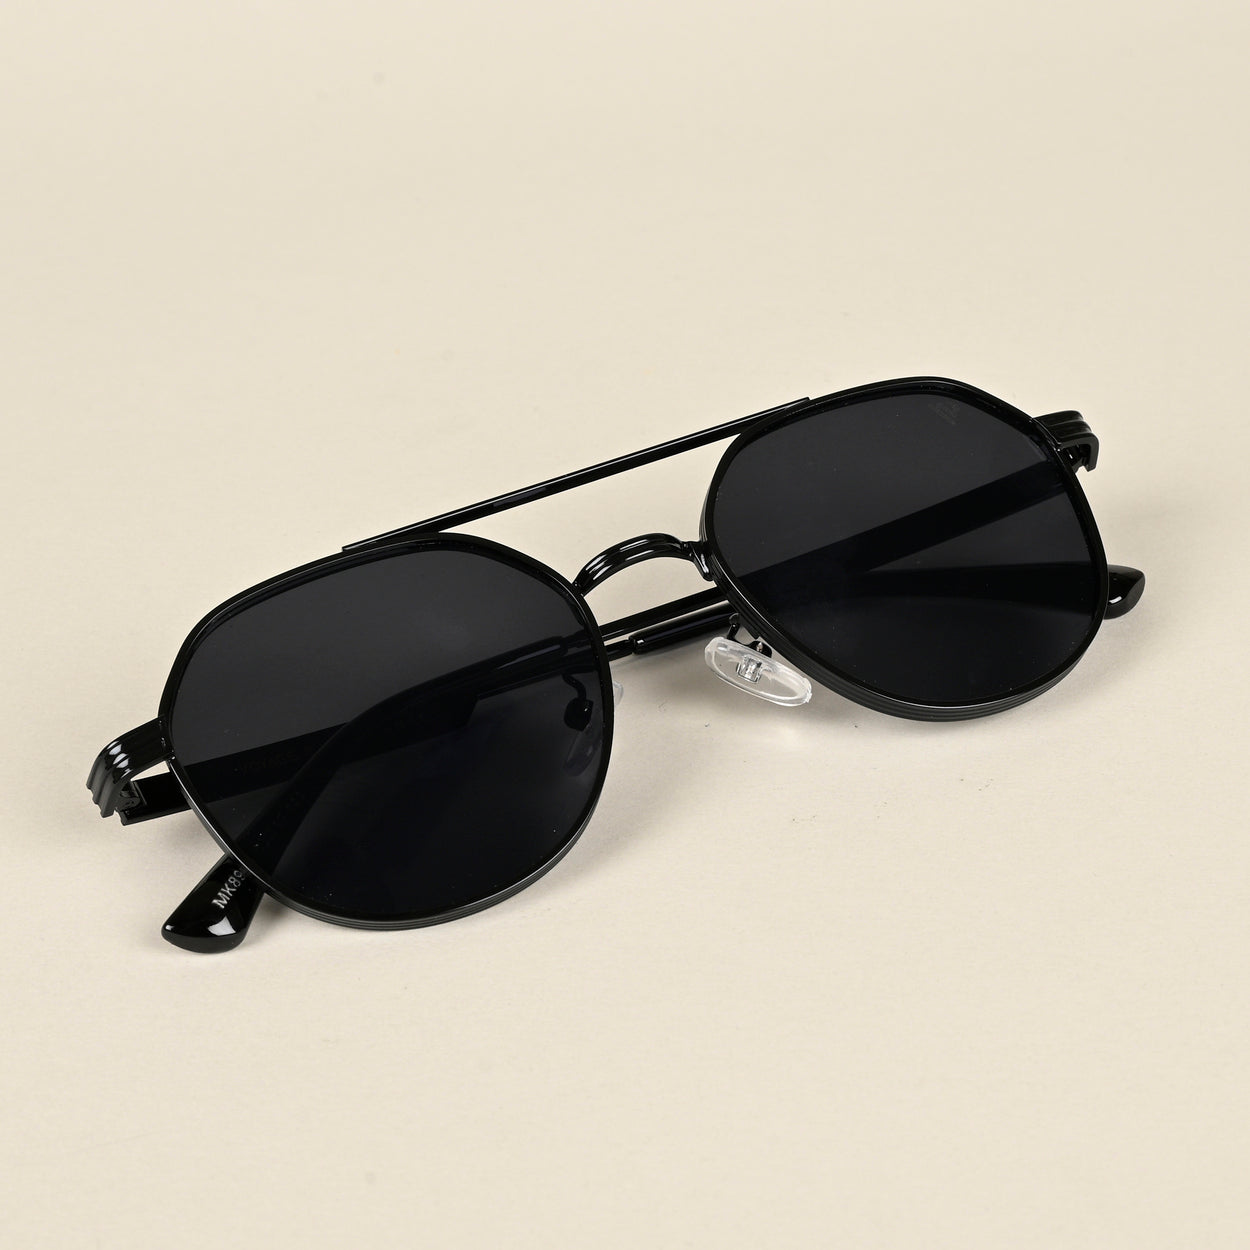 Voyage Black Round Sunglasses for Men & Women (8950MG4331)